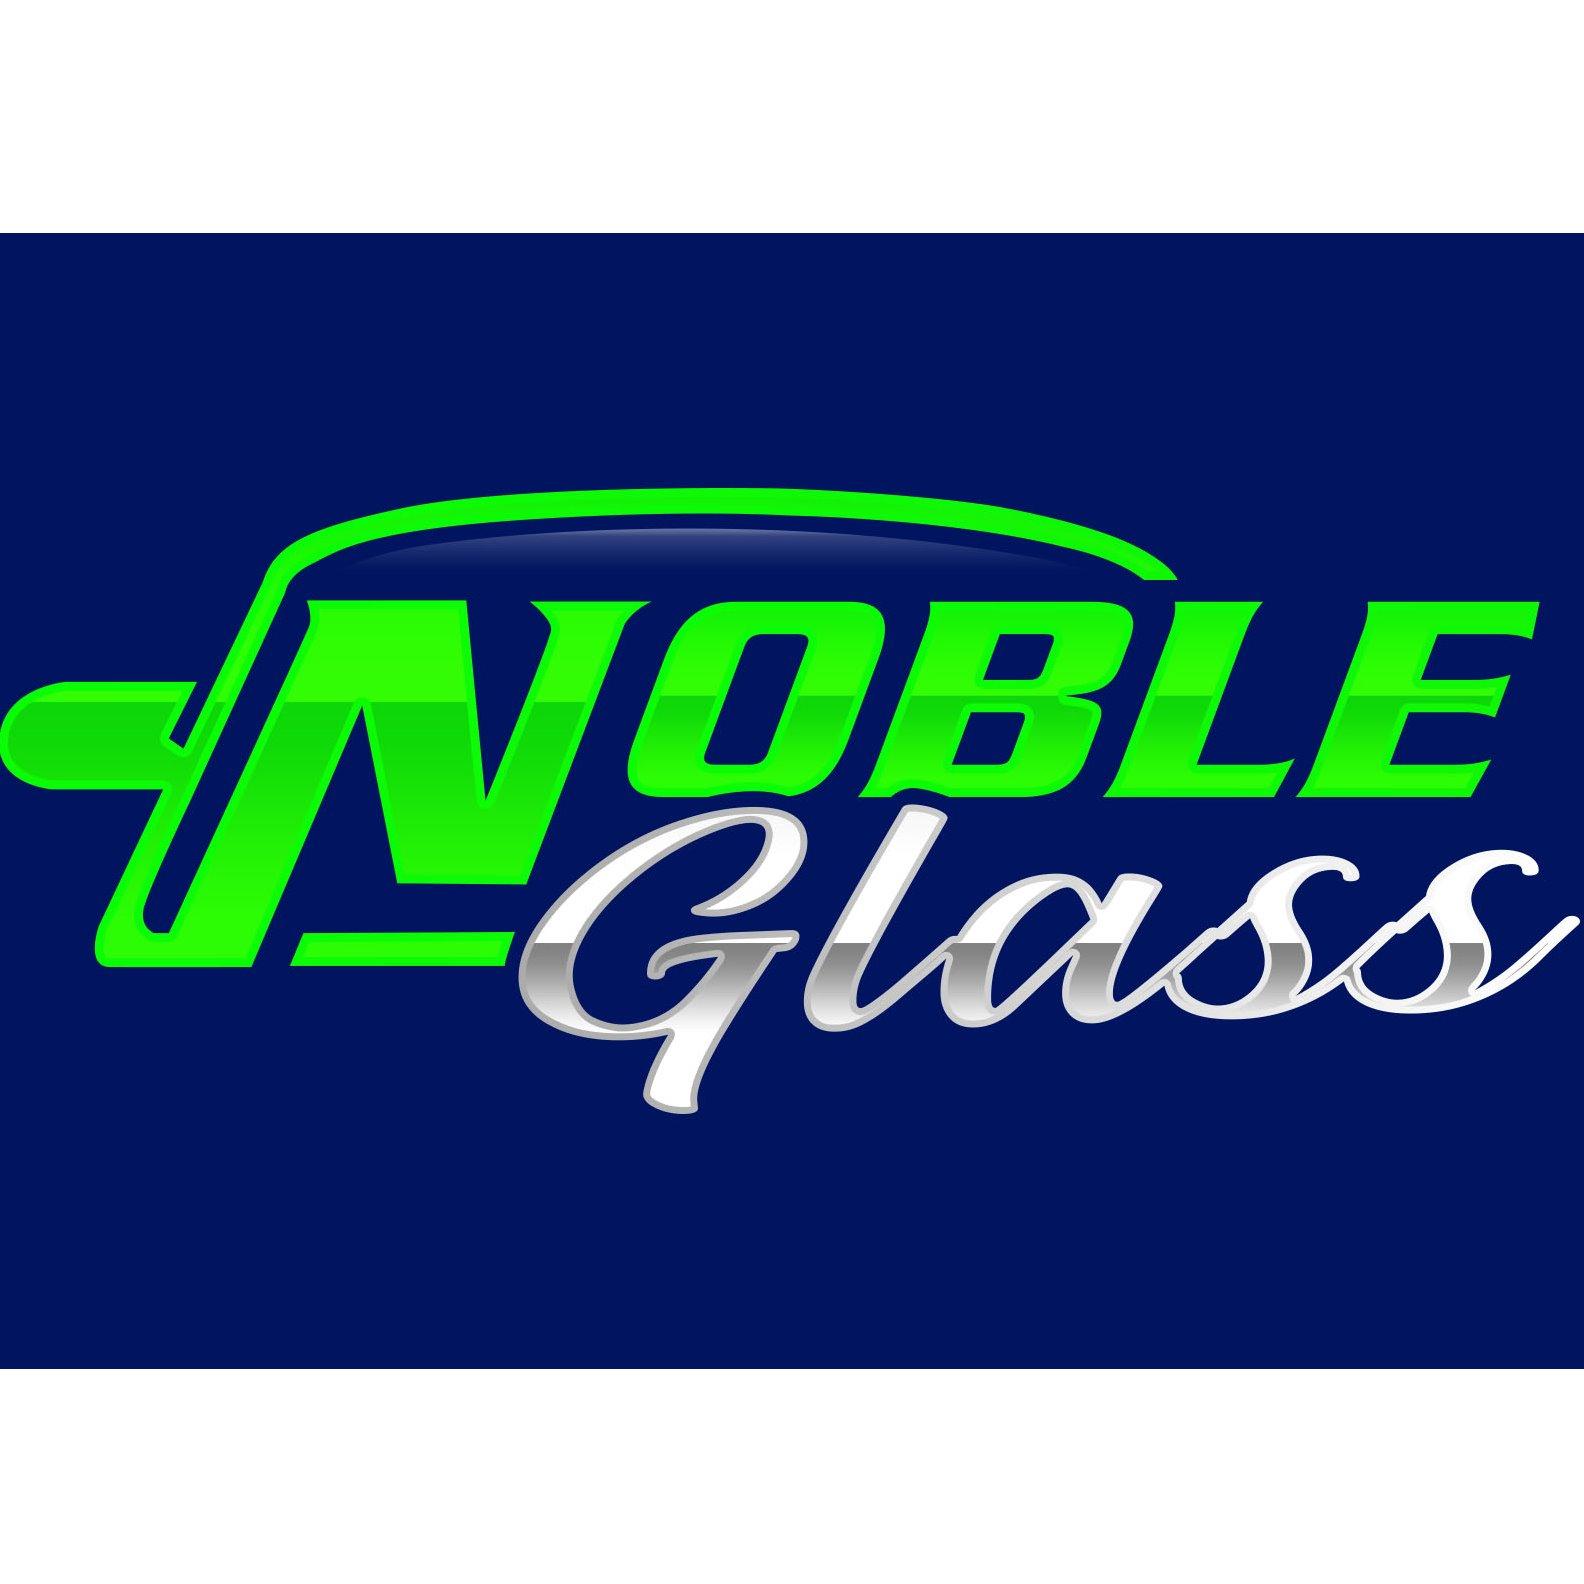 Noble Glass Inc. Logo